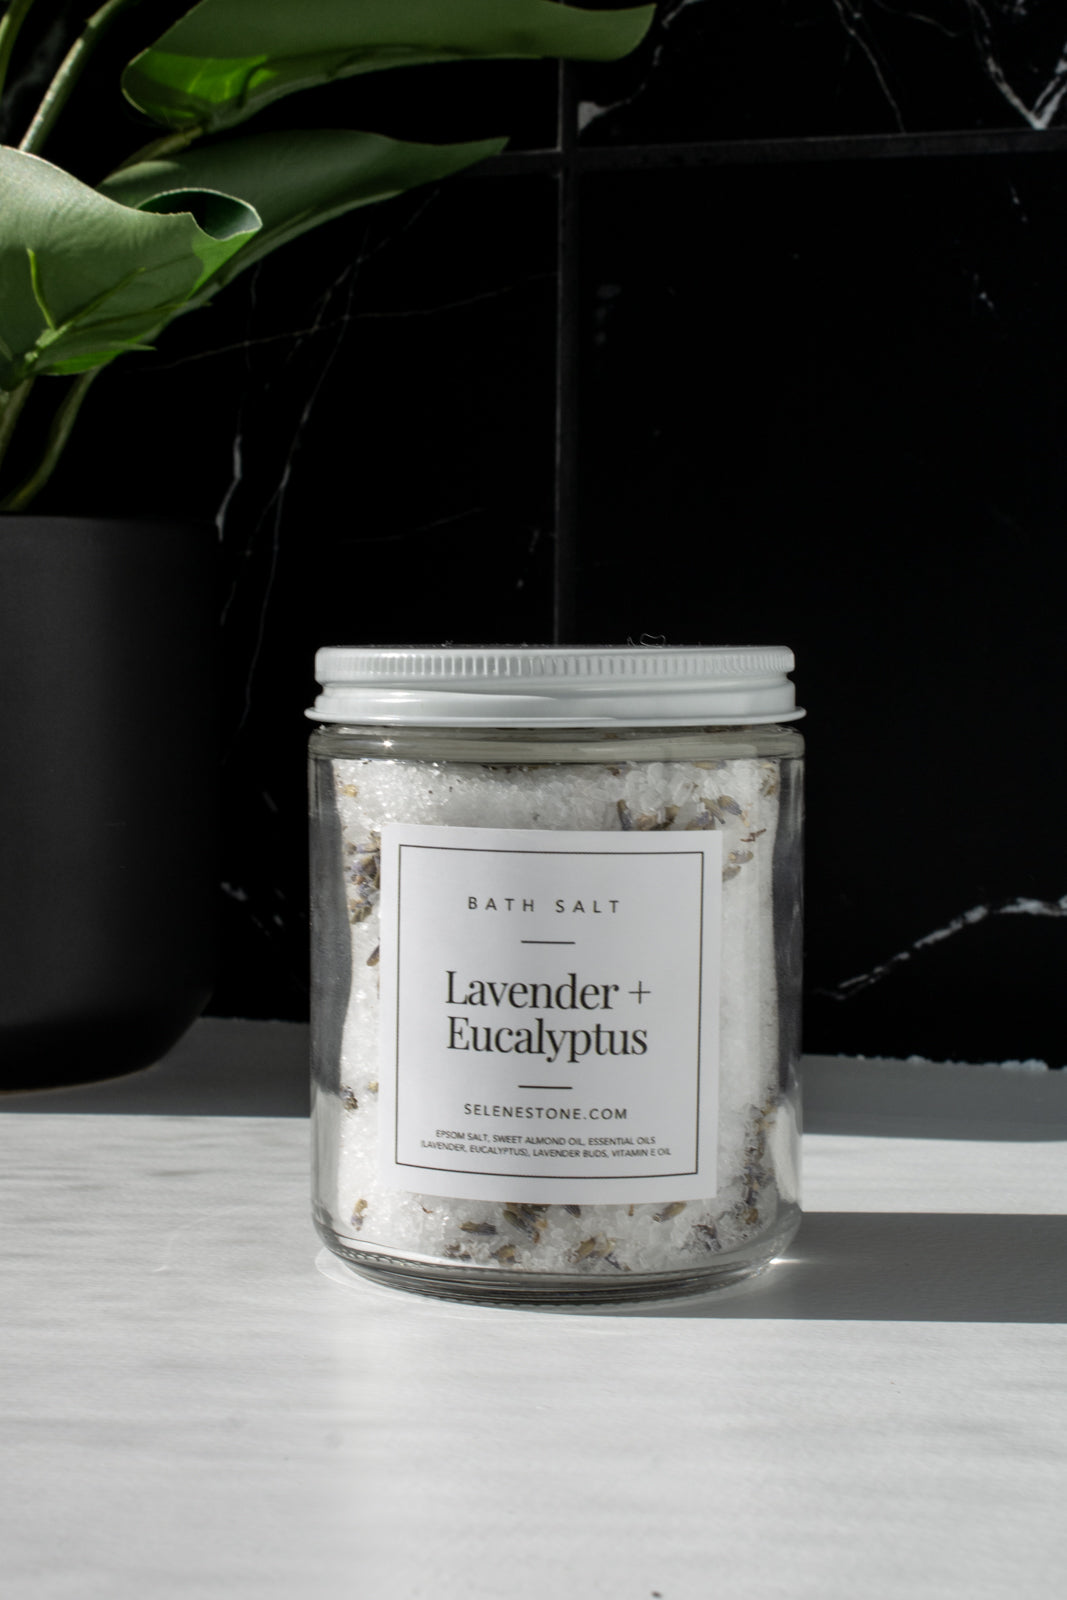 Lavender + Eucalyptus Bath Salt